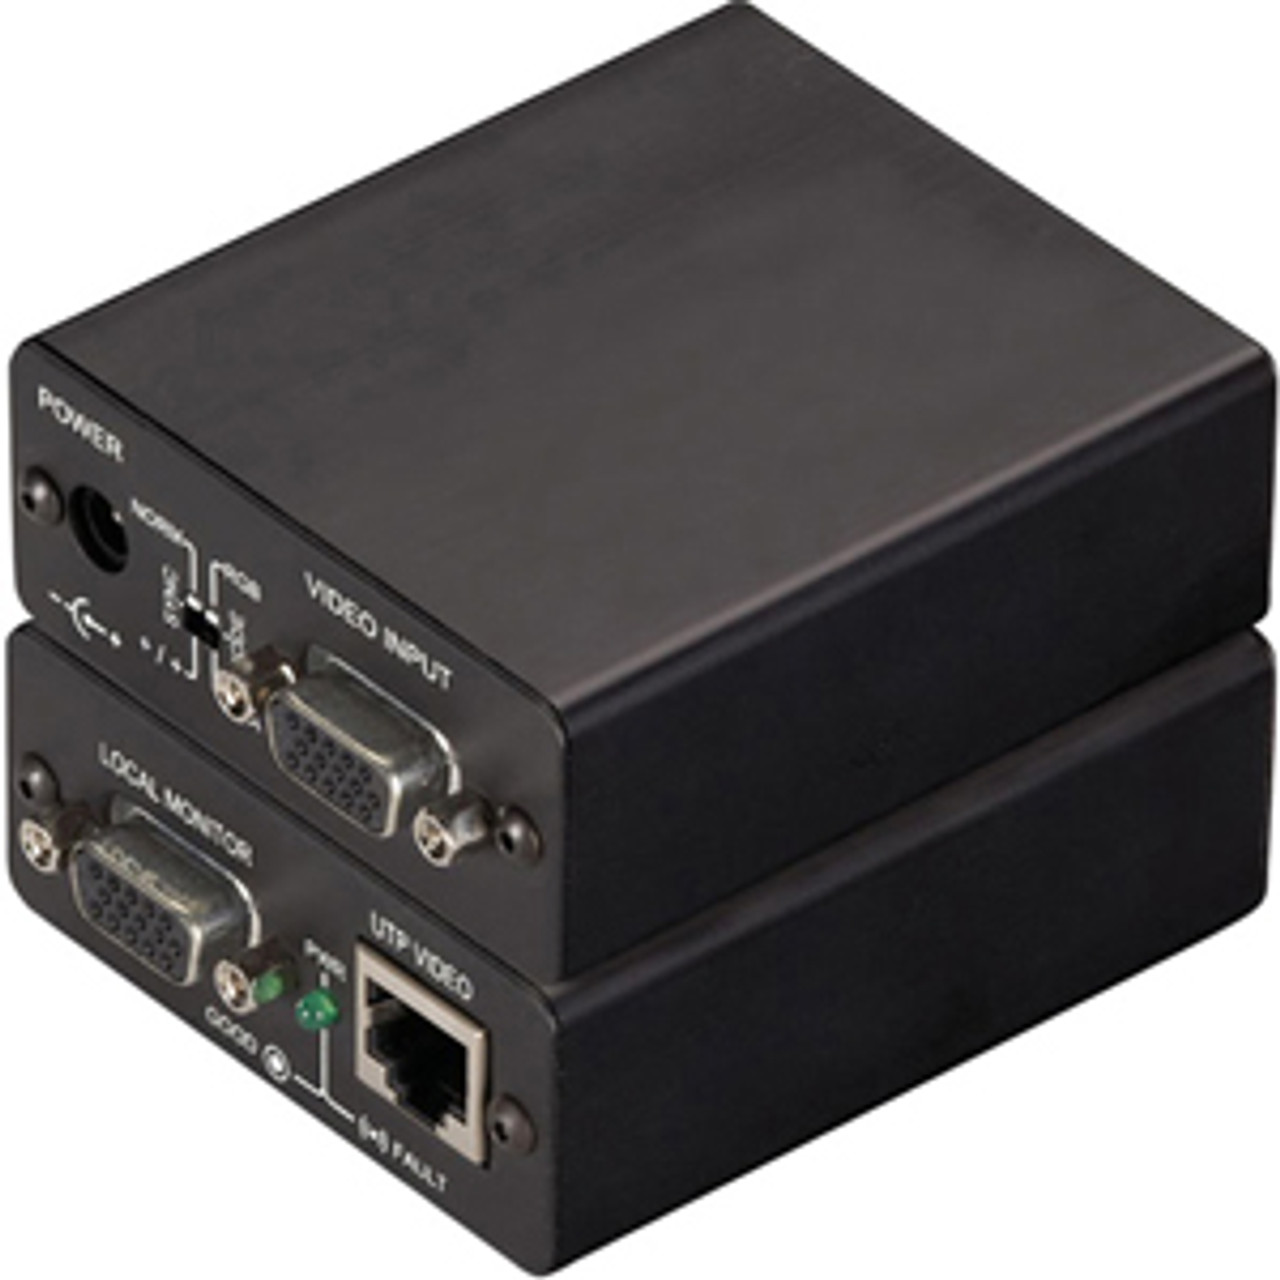 AC603A Black Box Mini CAT5 VGA Extender Transmitter with Local Port